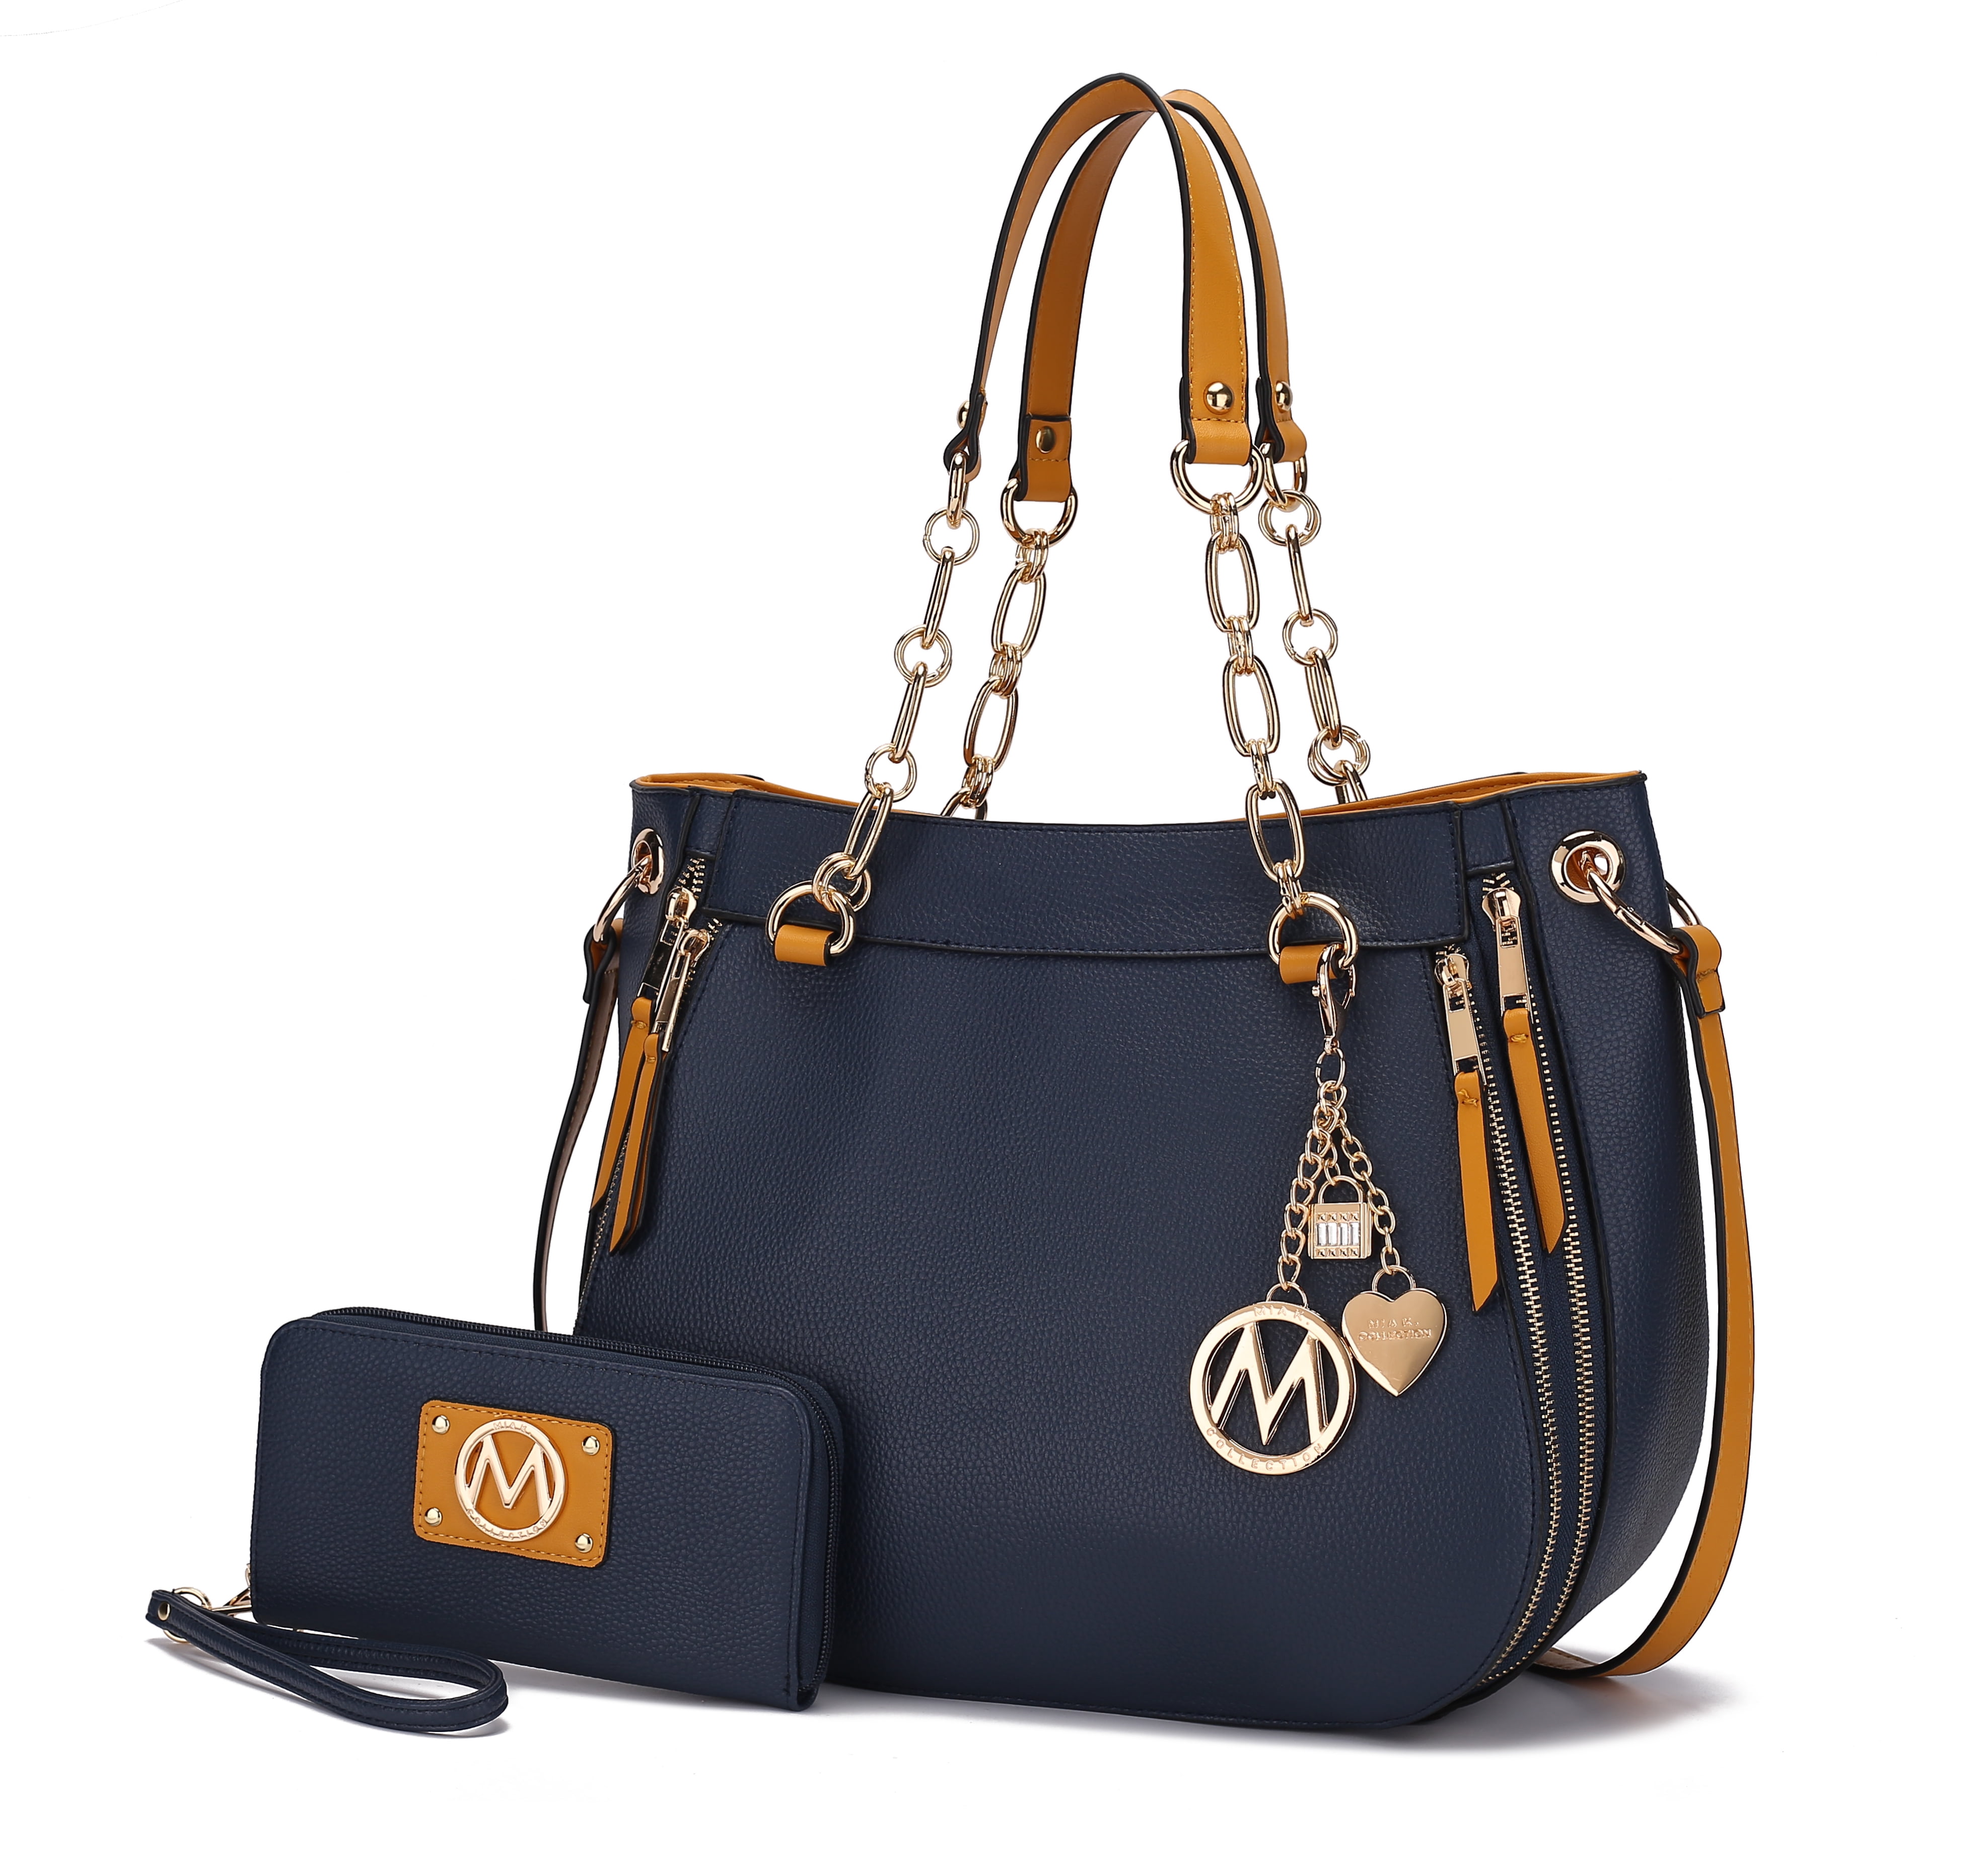 Aitbags Crossbody Bag for Women Lightweight Handbags Small Shoulder Purses with Tassel